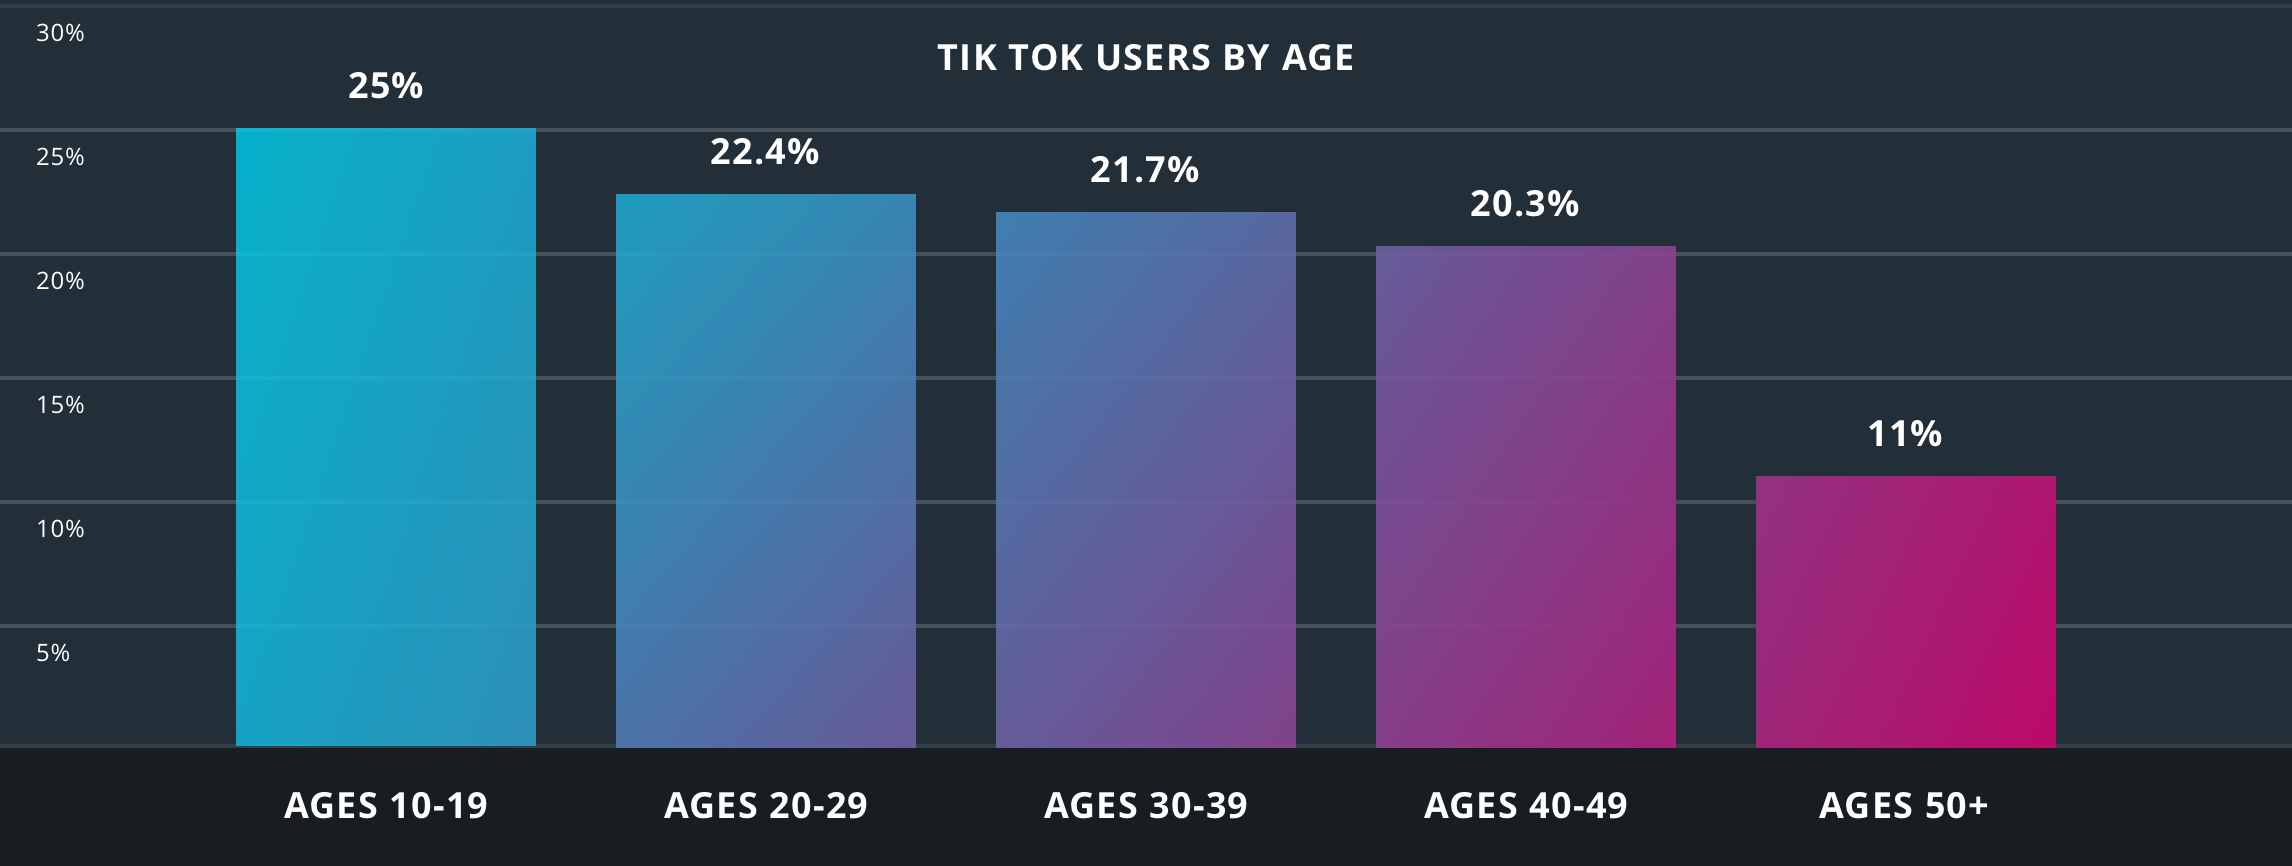 tik tok users by age